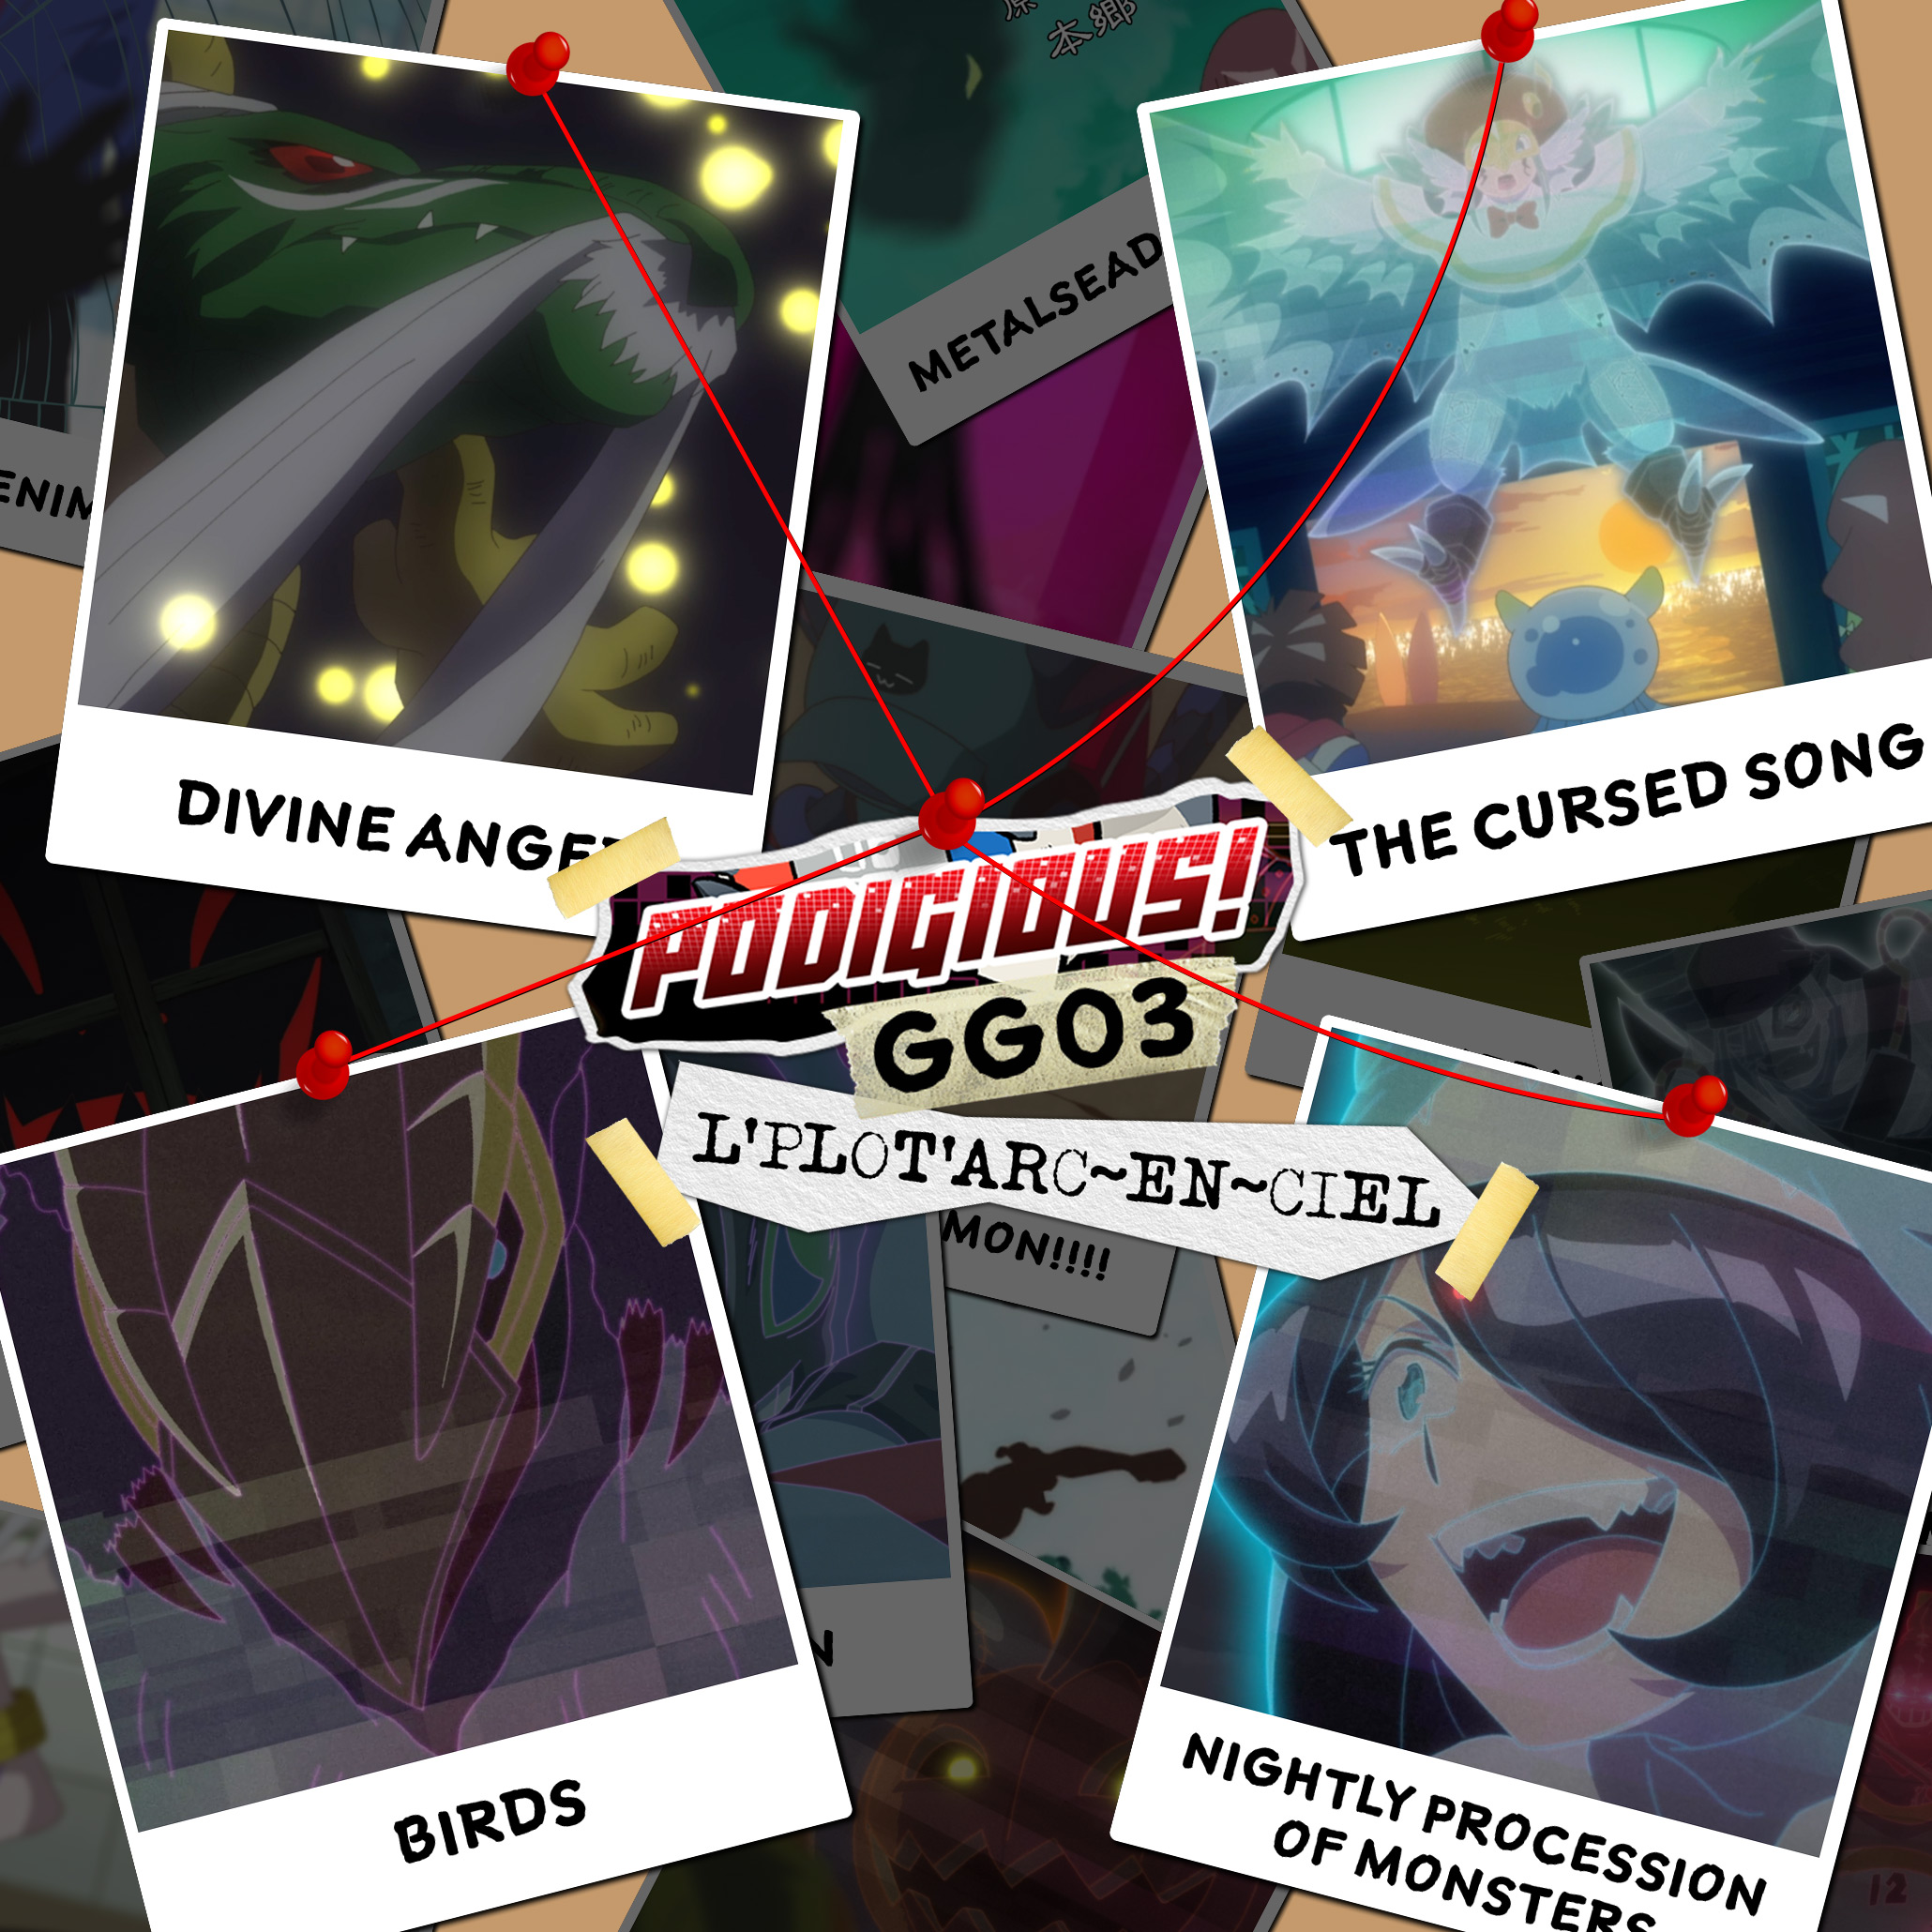 Podigious! Digimon Adventure 2020 Episode 67 “The End of the Adventure”